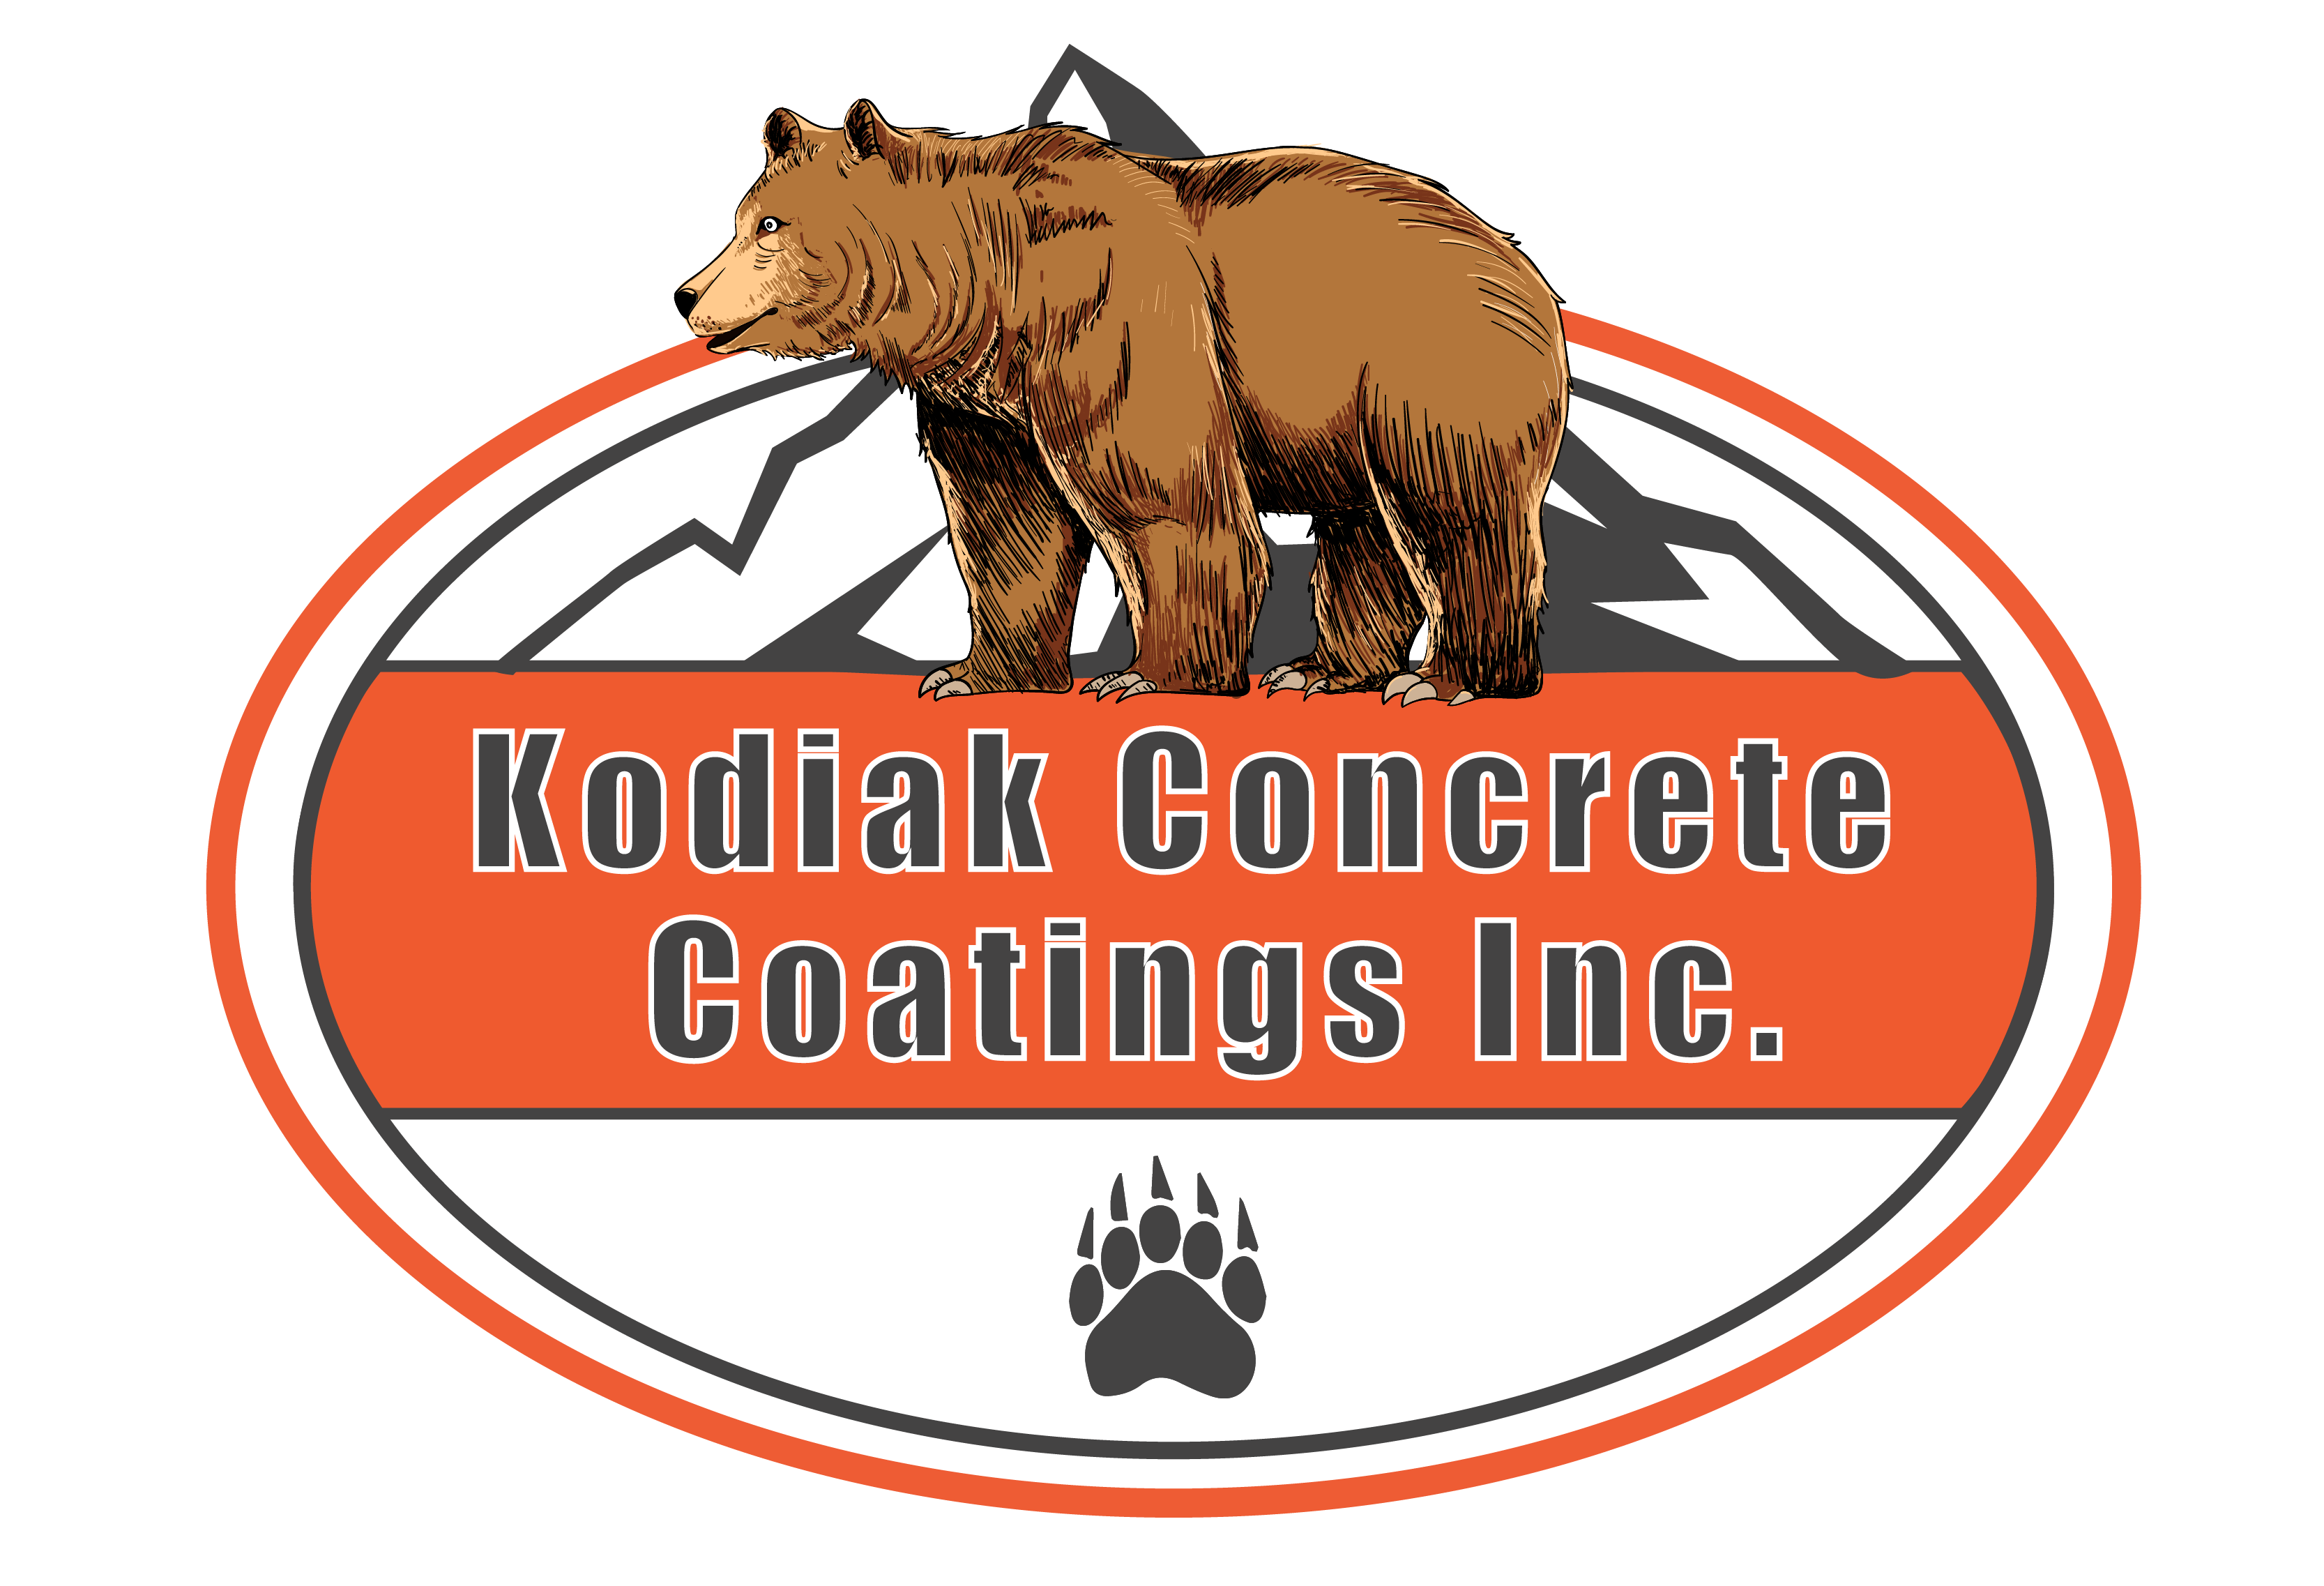 Kodiak Concrete Coatings